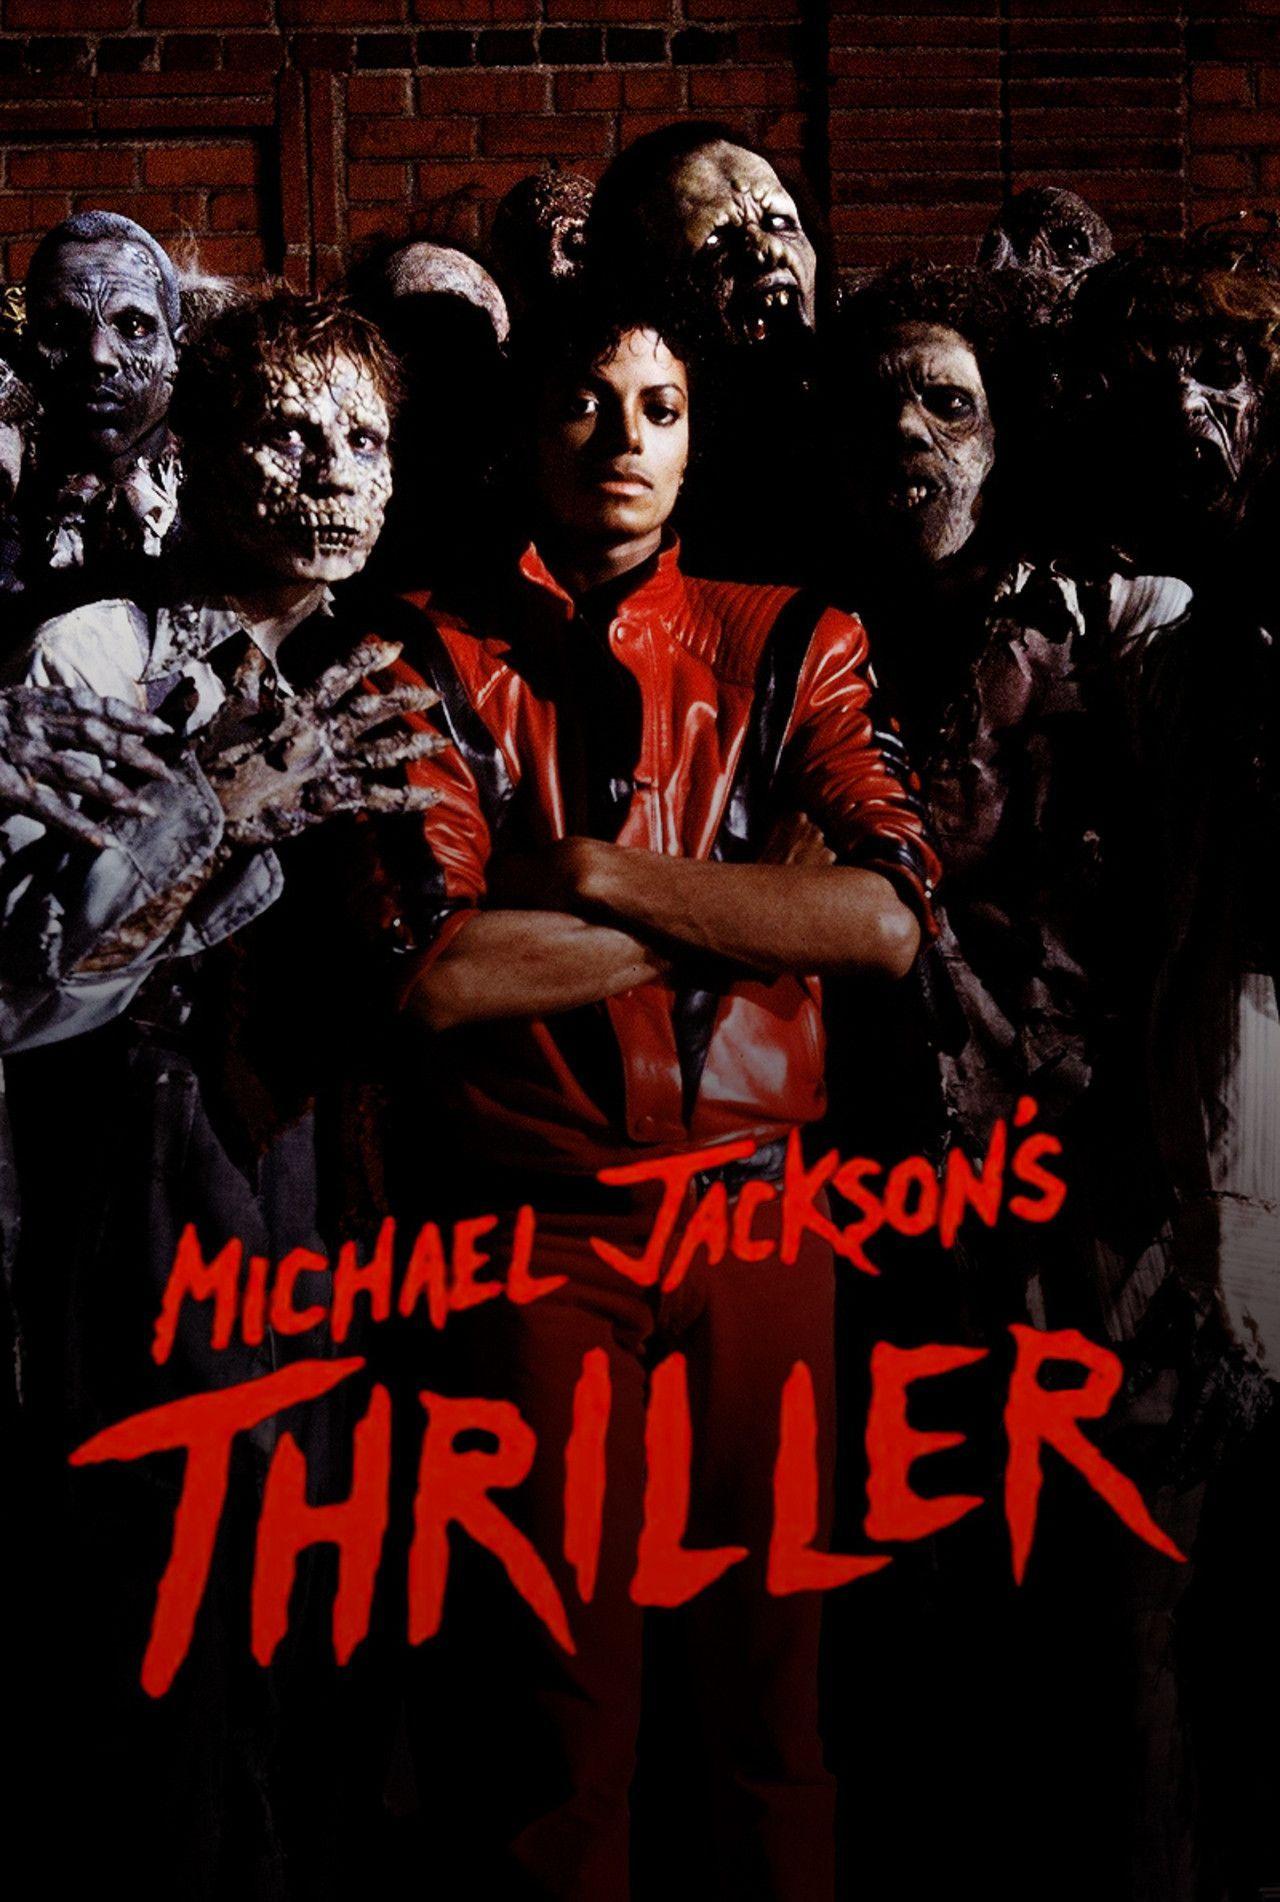 Michael Jackson's Thriller Print. Thrillers in 2019